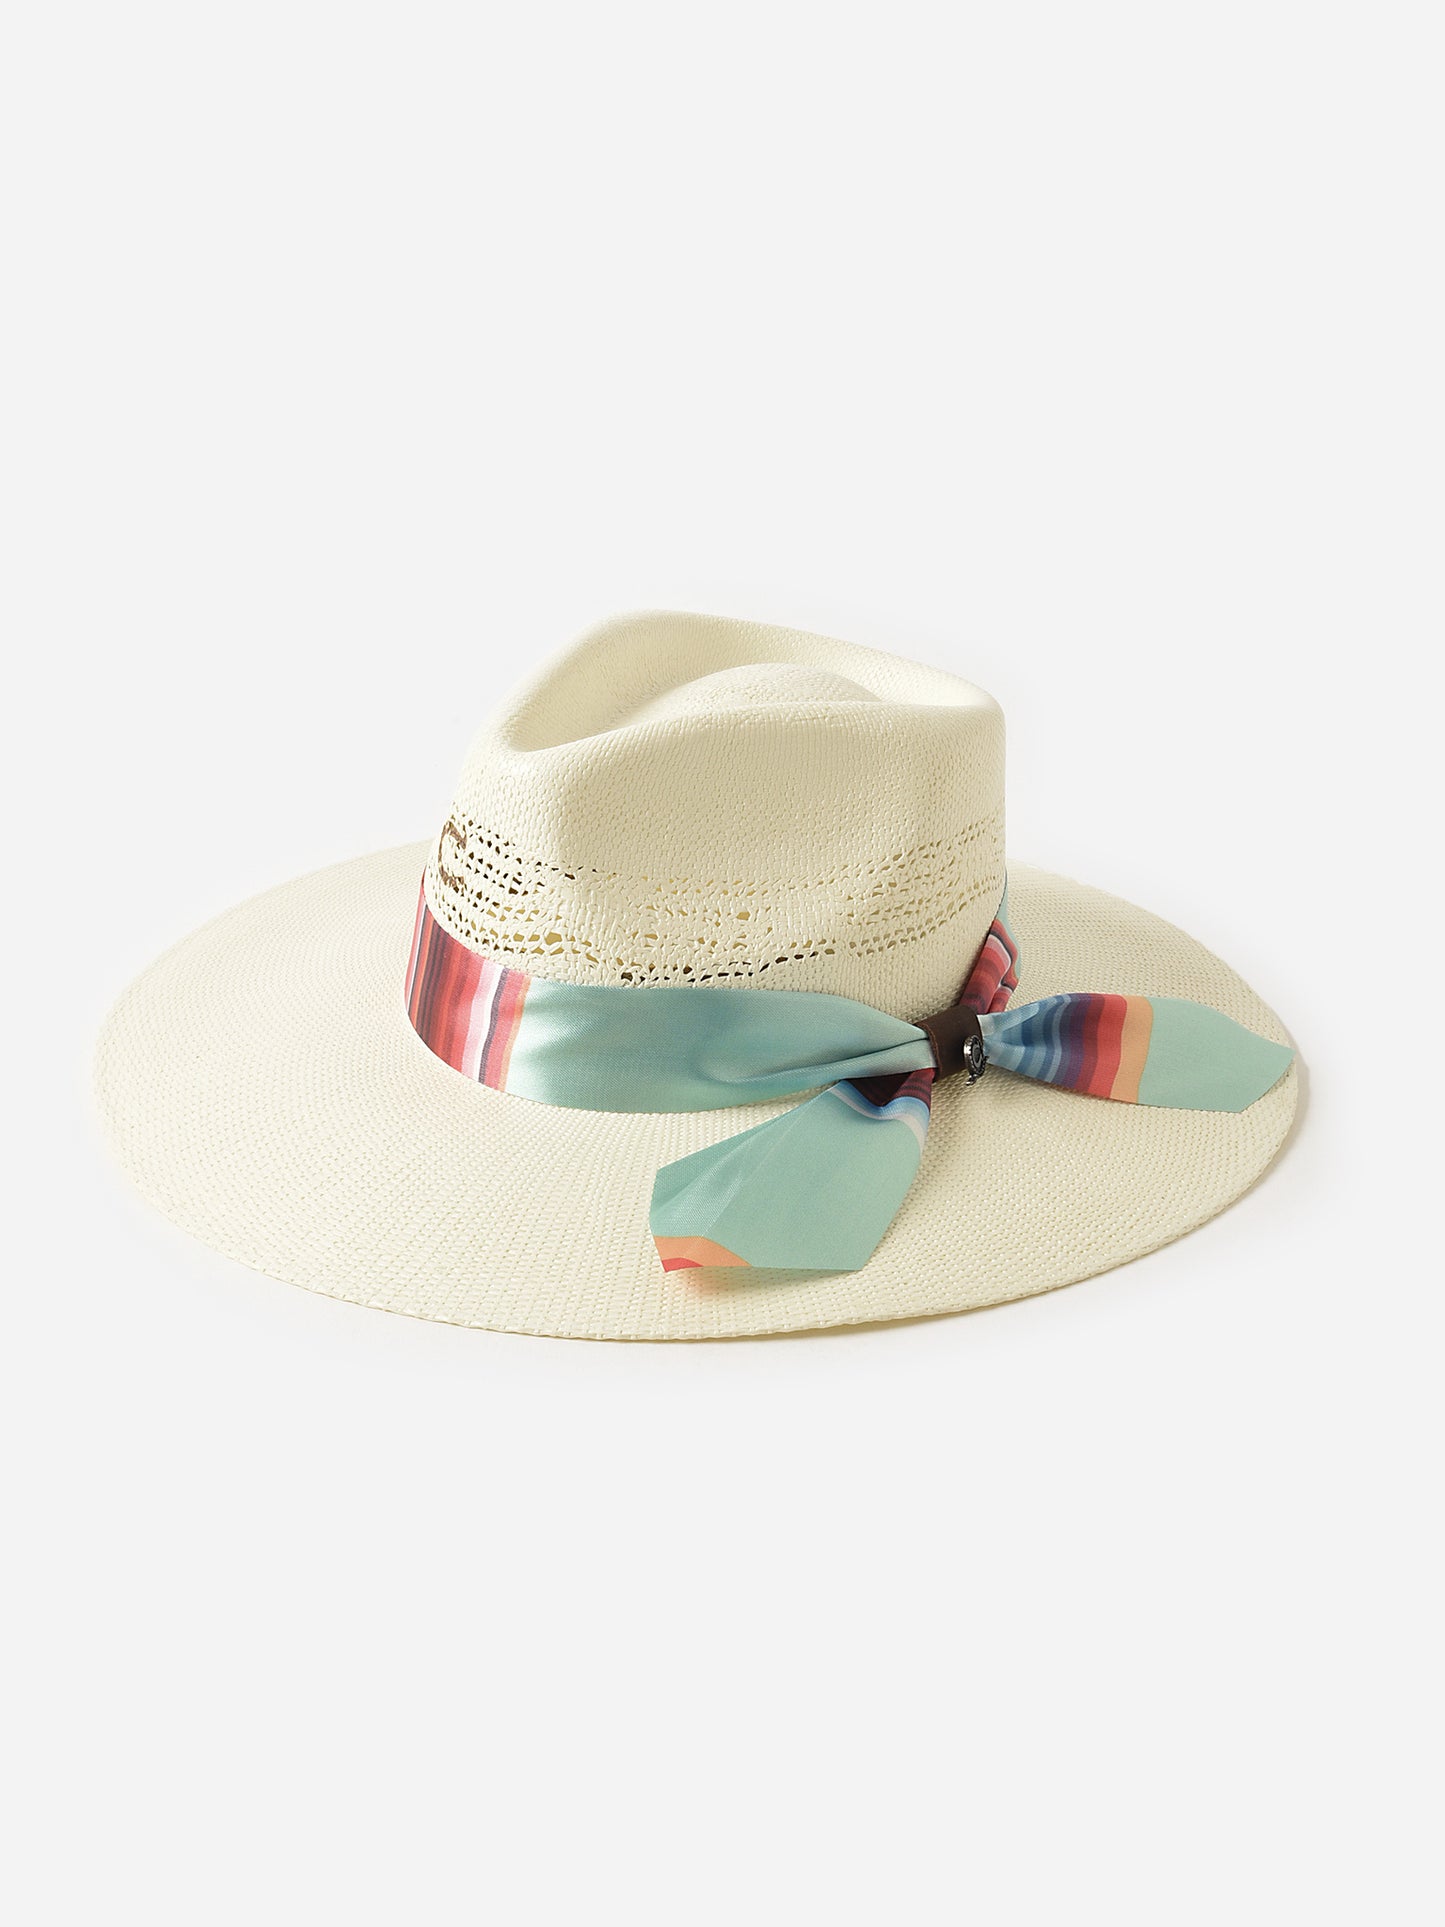 Charlie 1 Horse Women's Summer Serape Hat